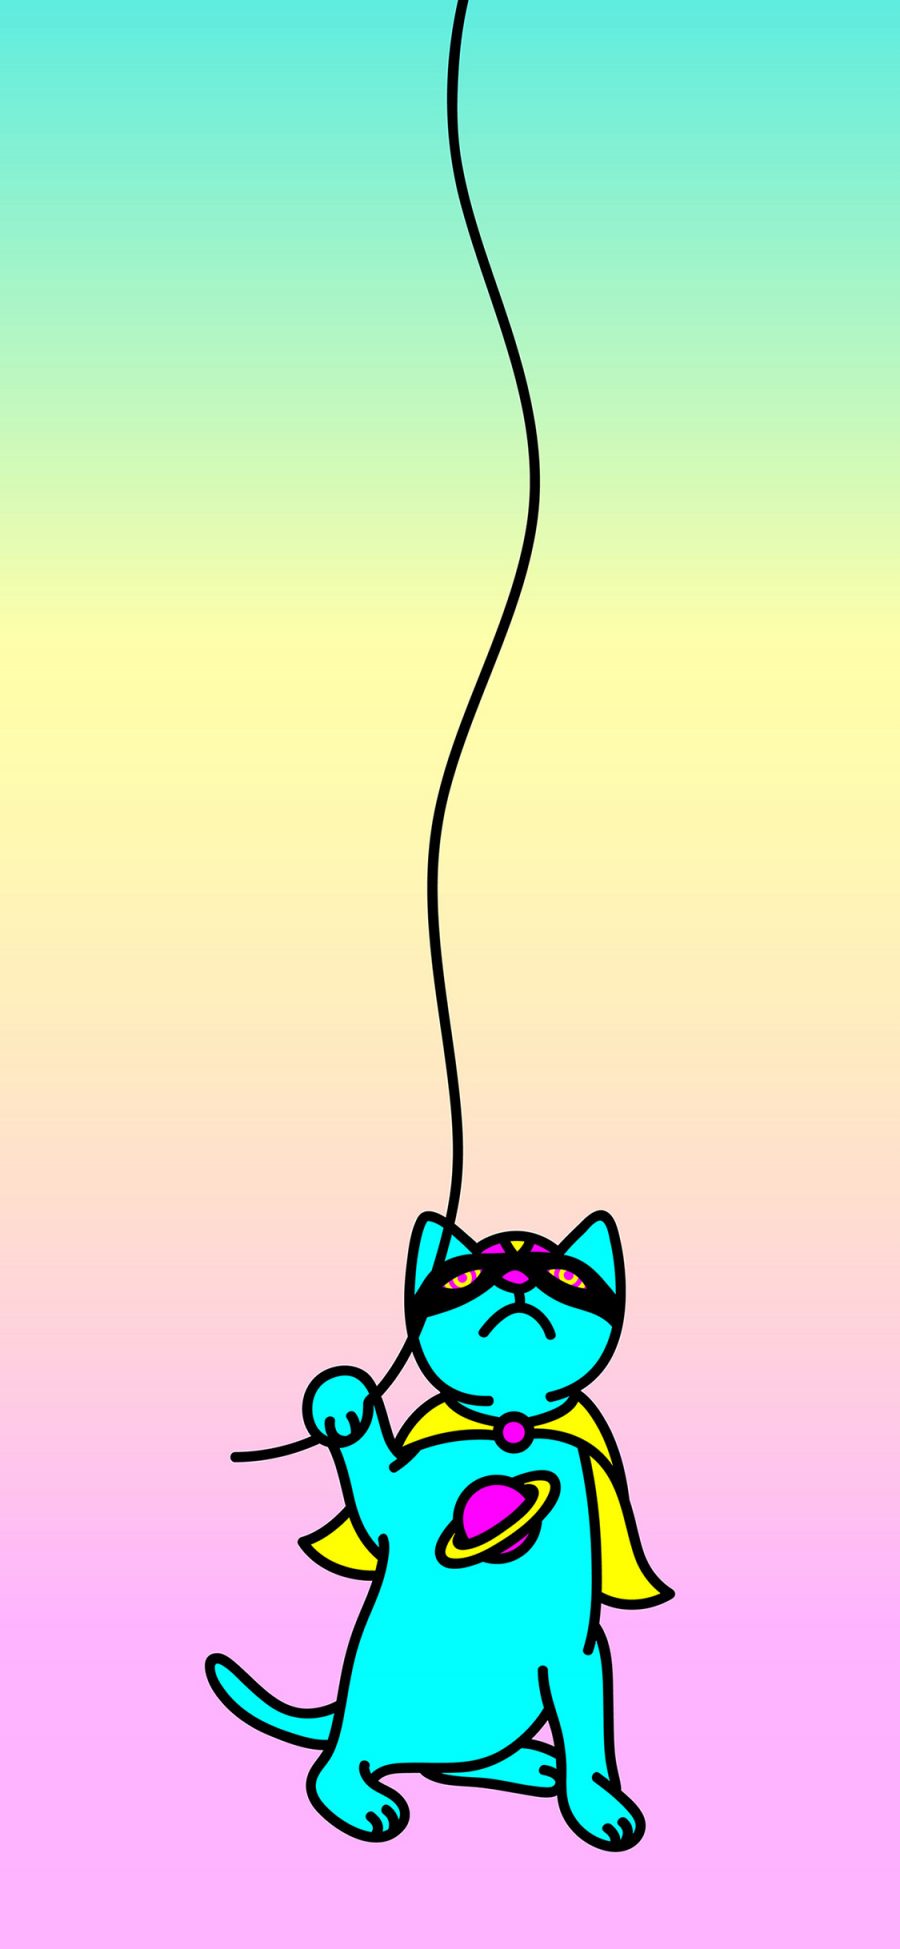 [2436×1125]Blissman插画 YandB作品 猫咪 苹果手机动漫壁纸图片